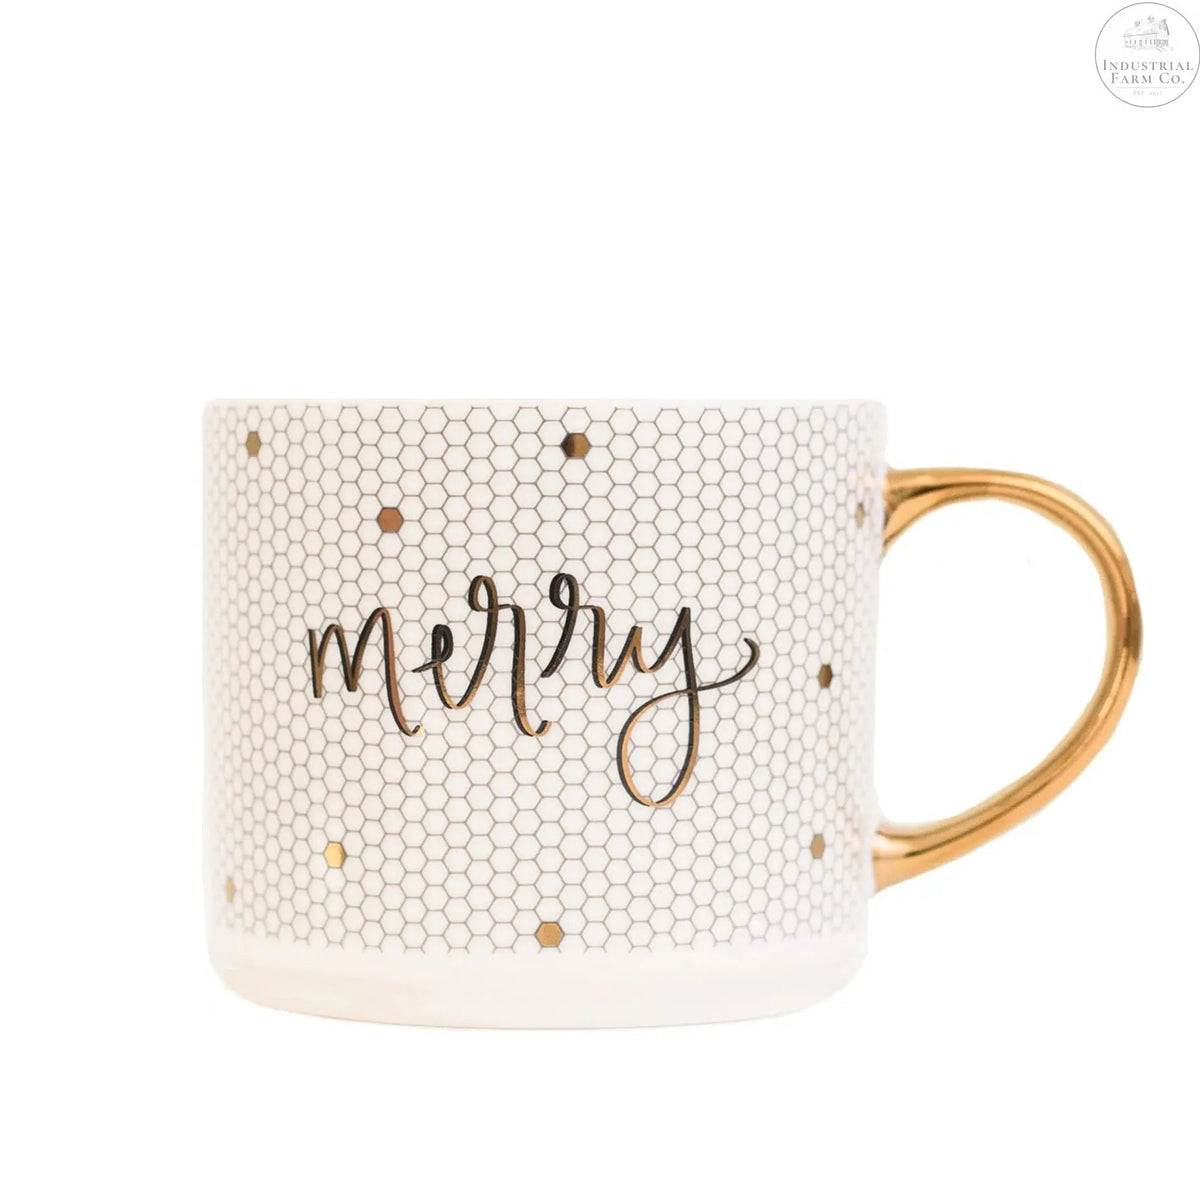 Merry Tile Coffee Mug     | Industrial Farm Co